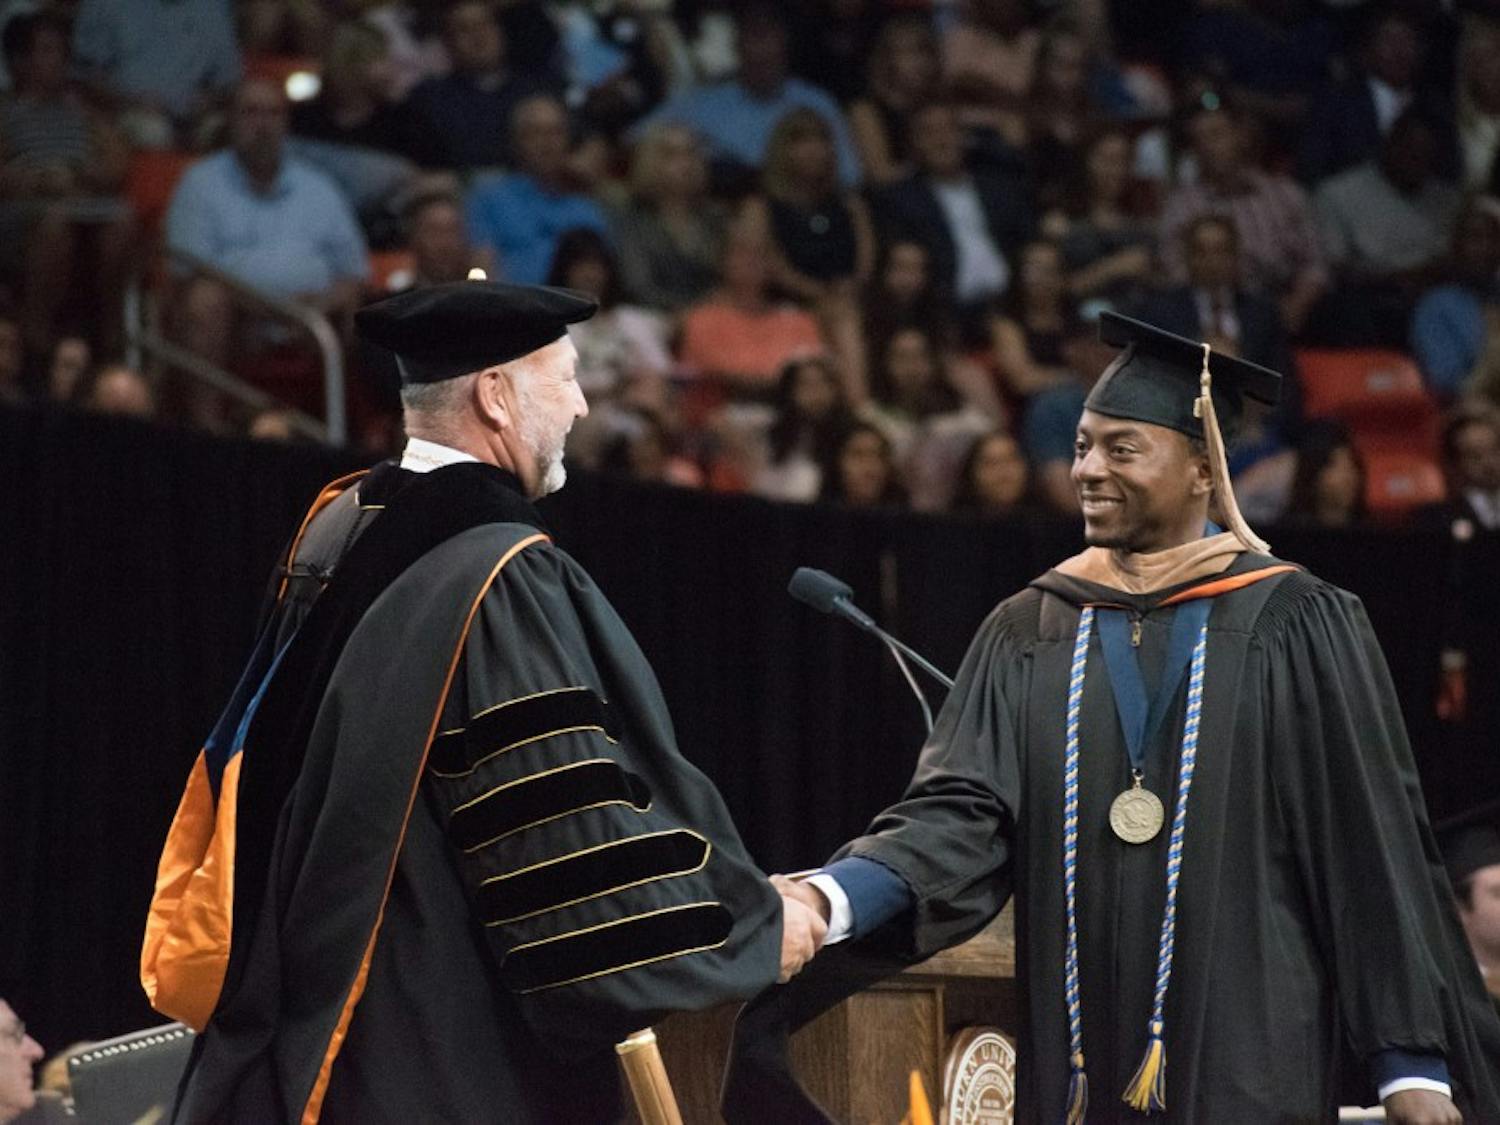 A graduate walks across the stage on Sunday, May 6, 2018, in Auburn, Ala.